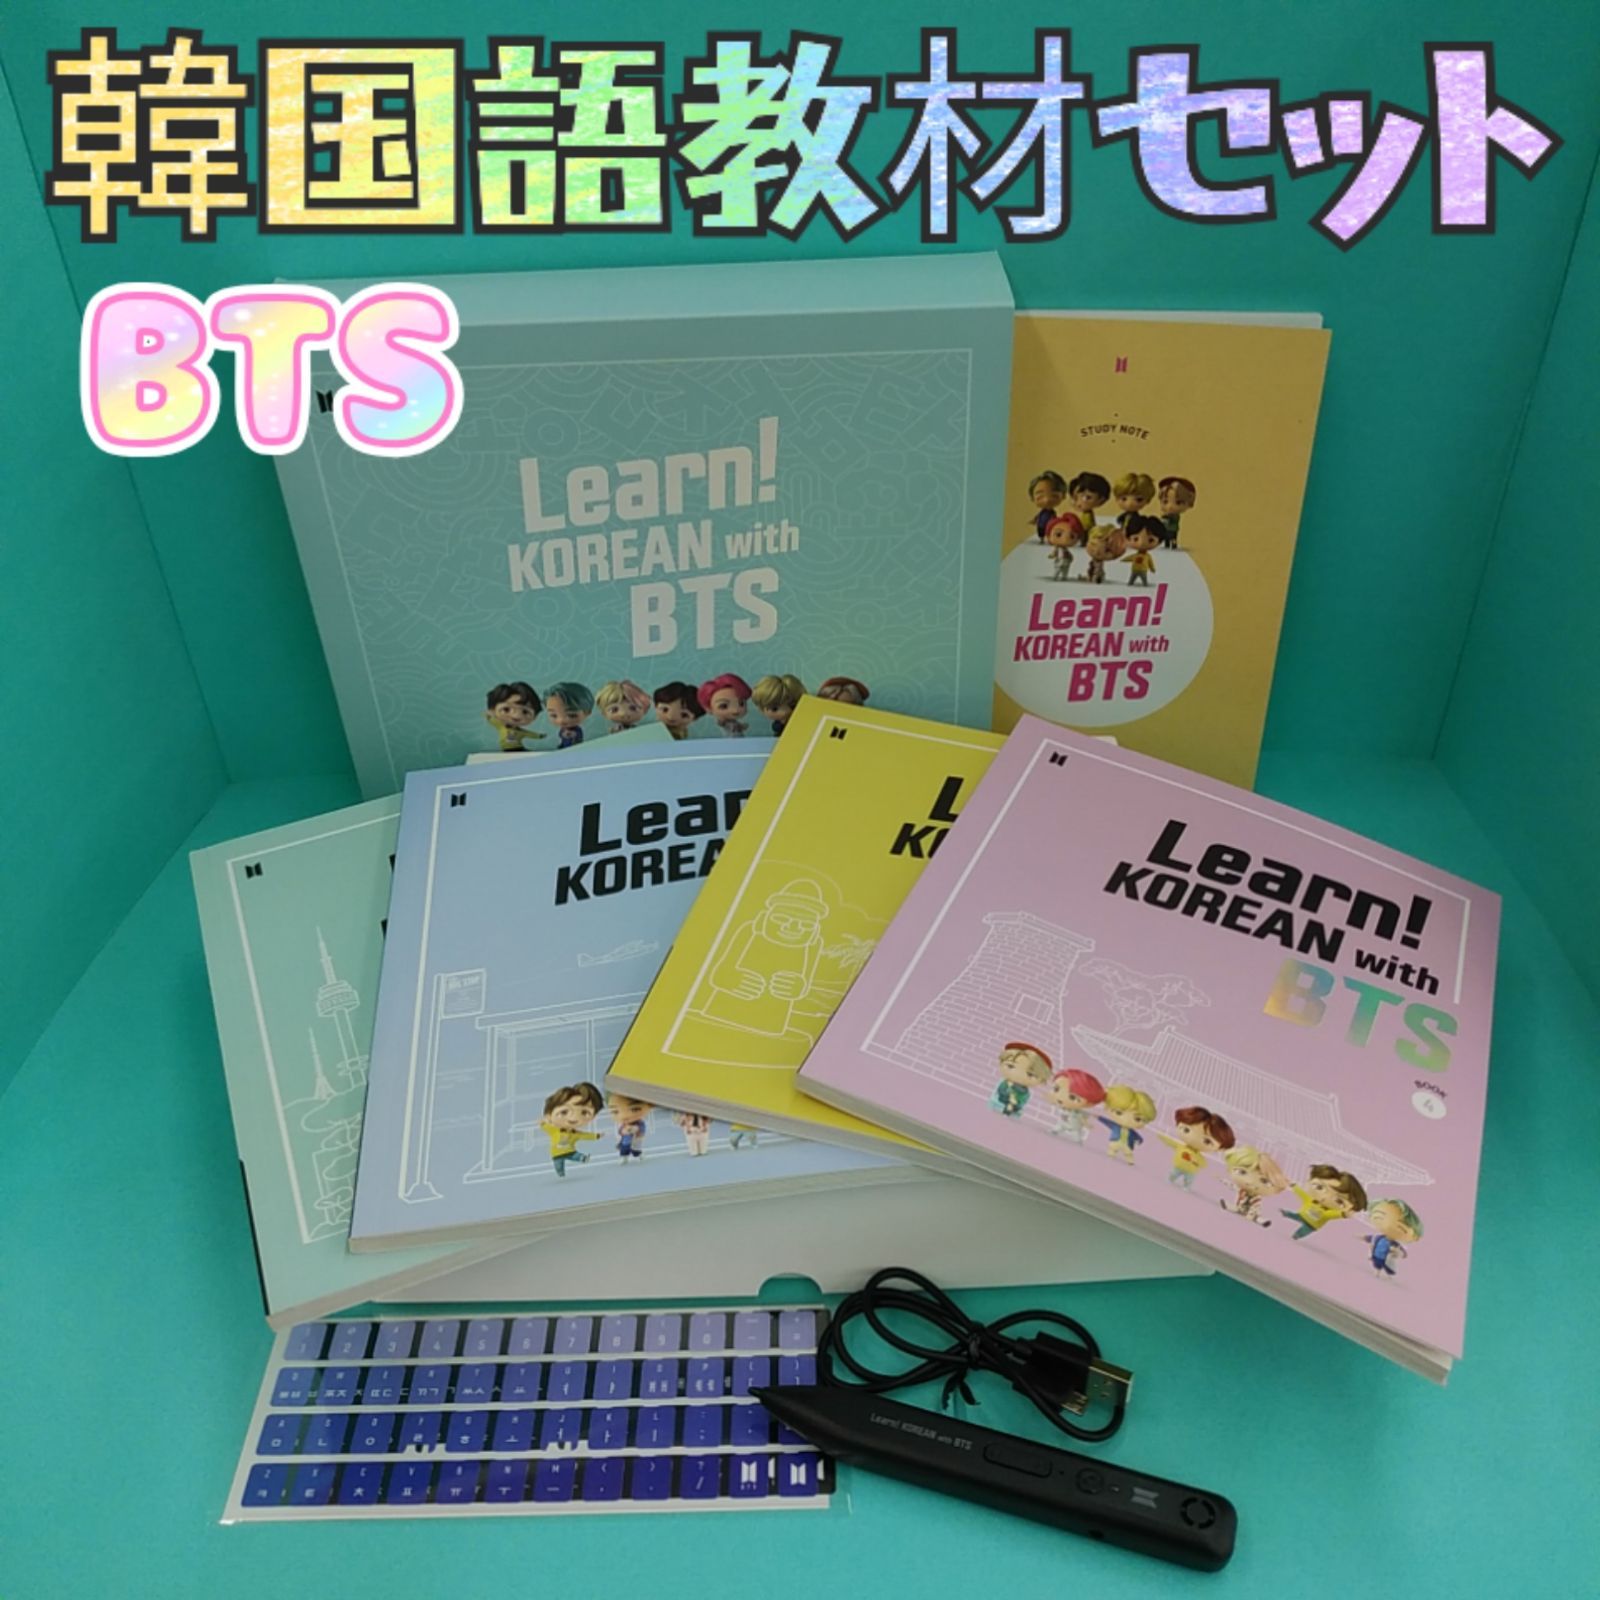 【BTS】 LEARN! KOREAN with BTS 韓国語 教材 実用 グッズ (10-2023-0923-NA-004)